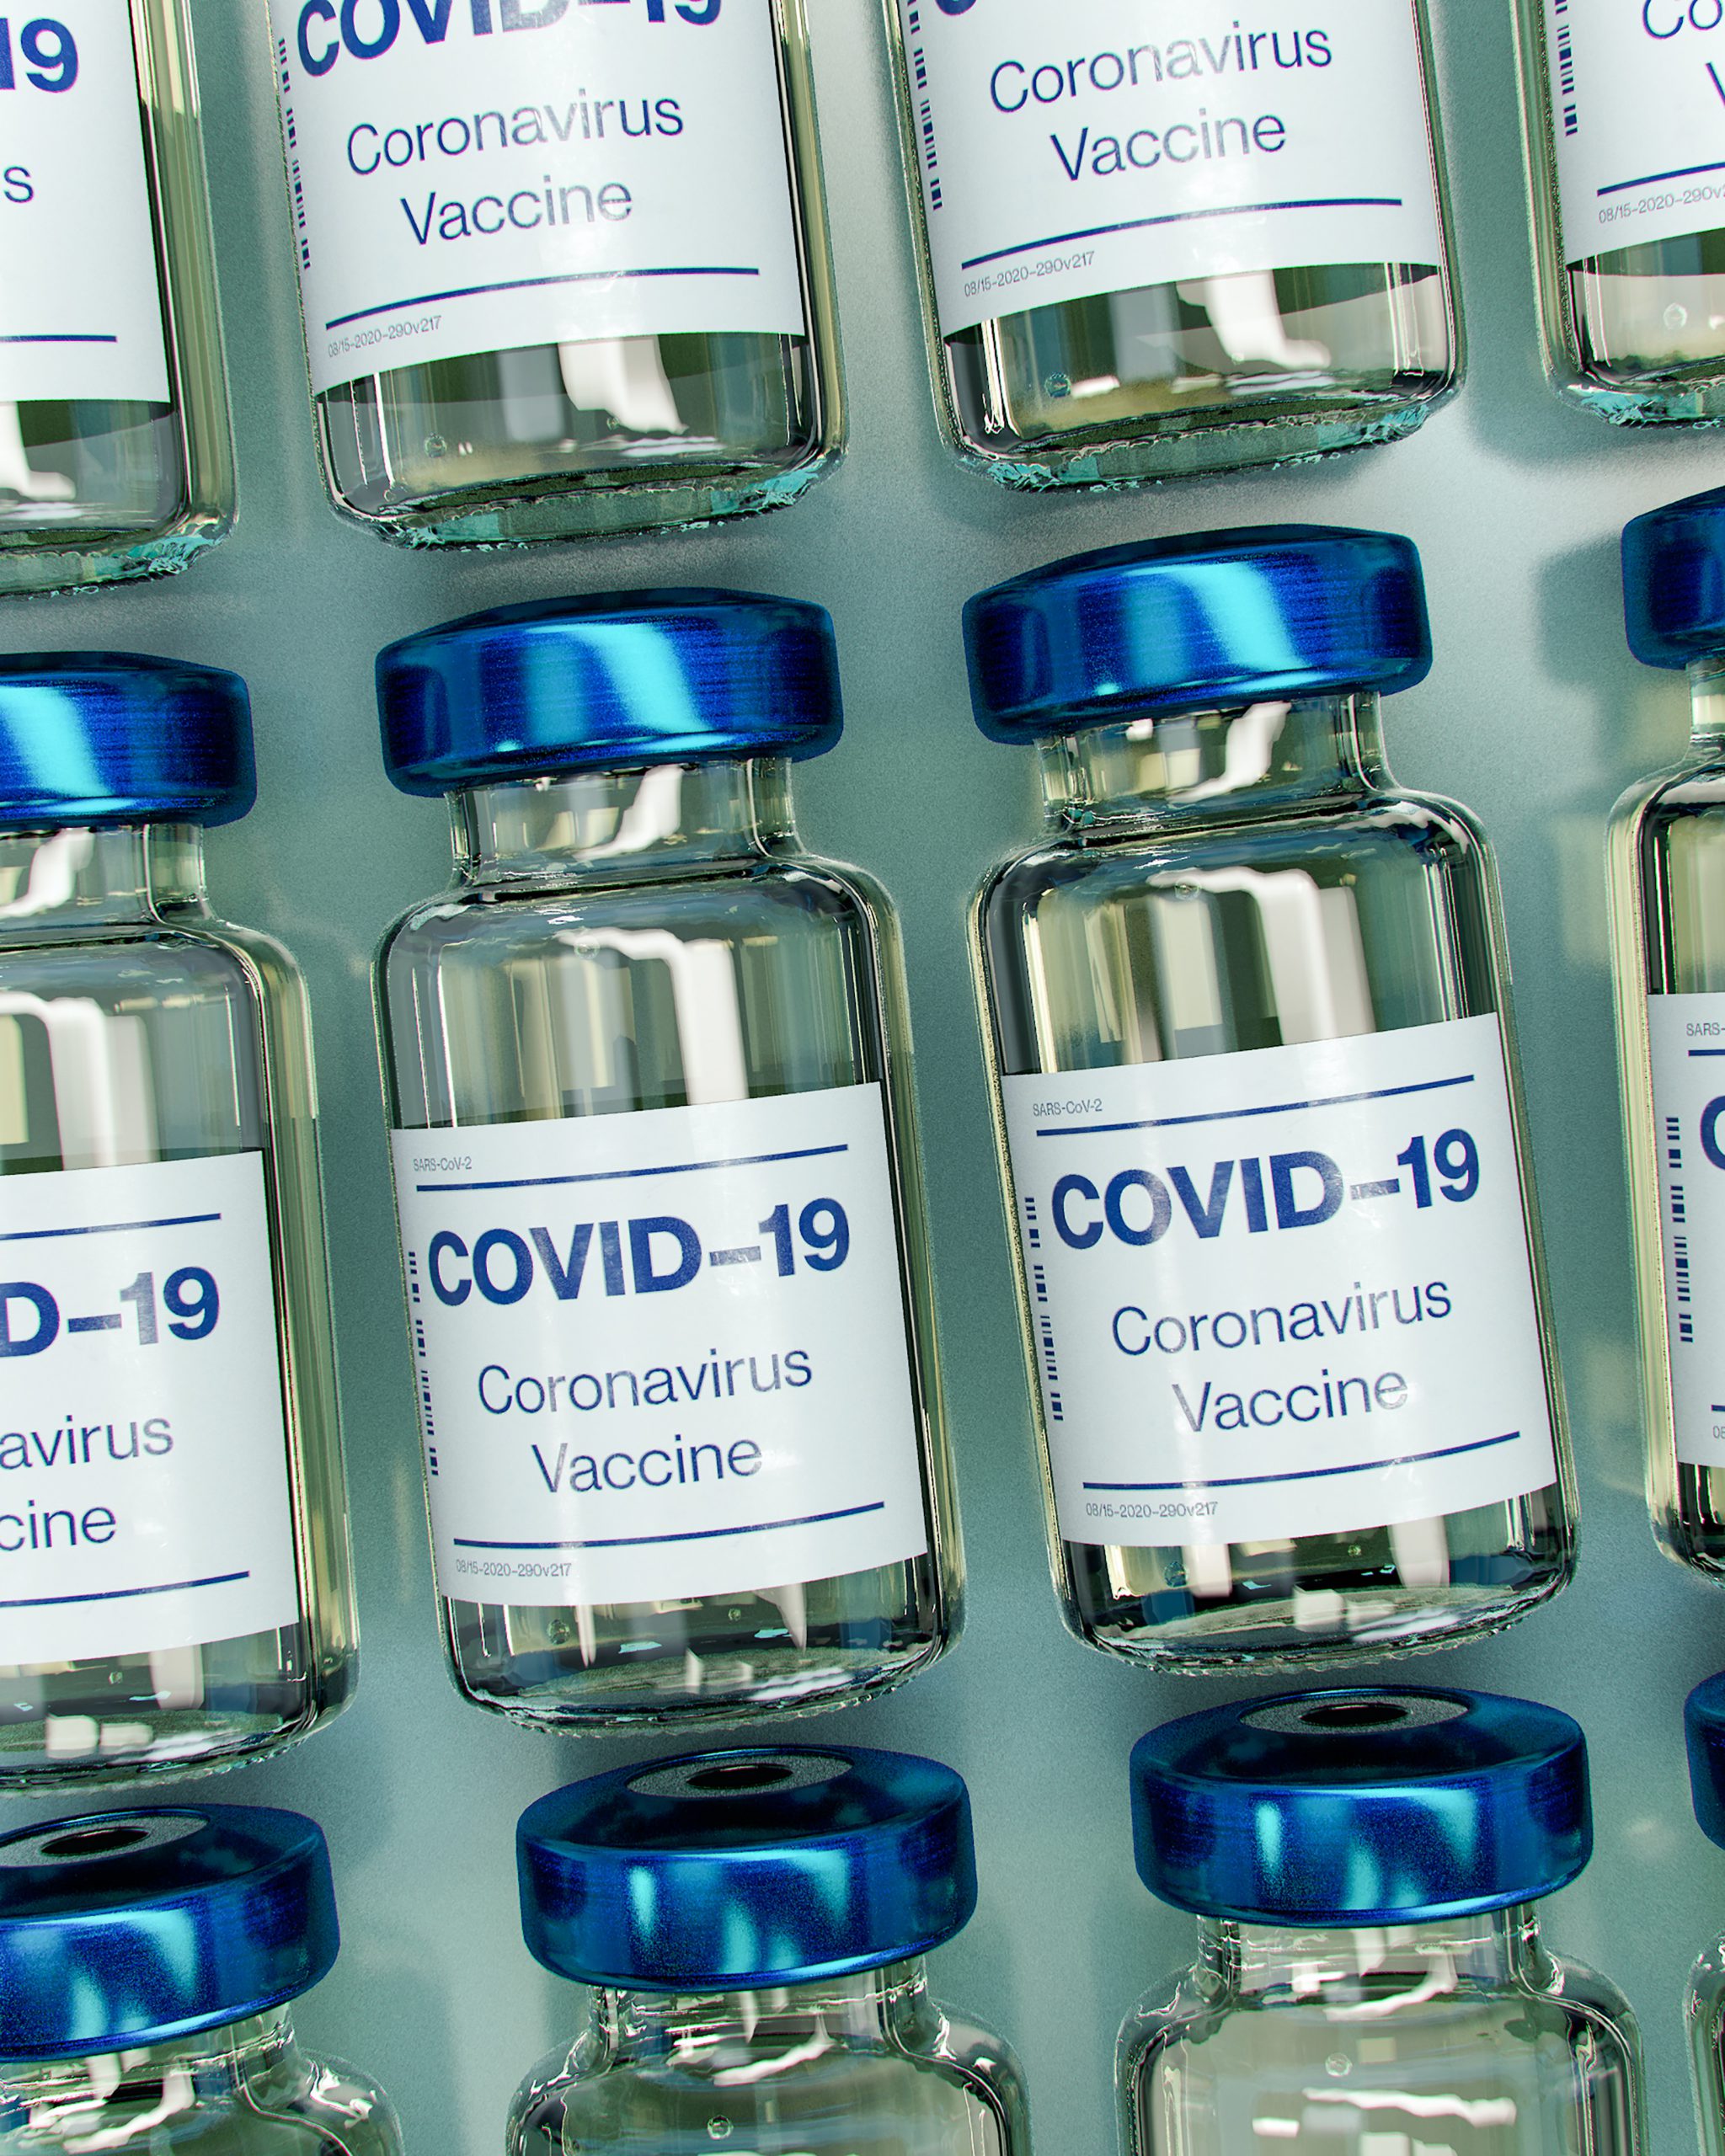 COVID-19 Vaccination Plan